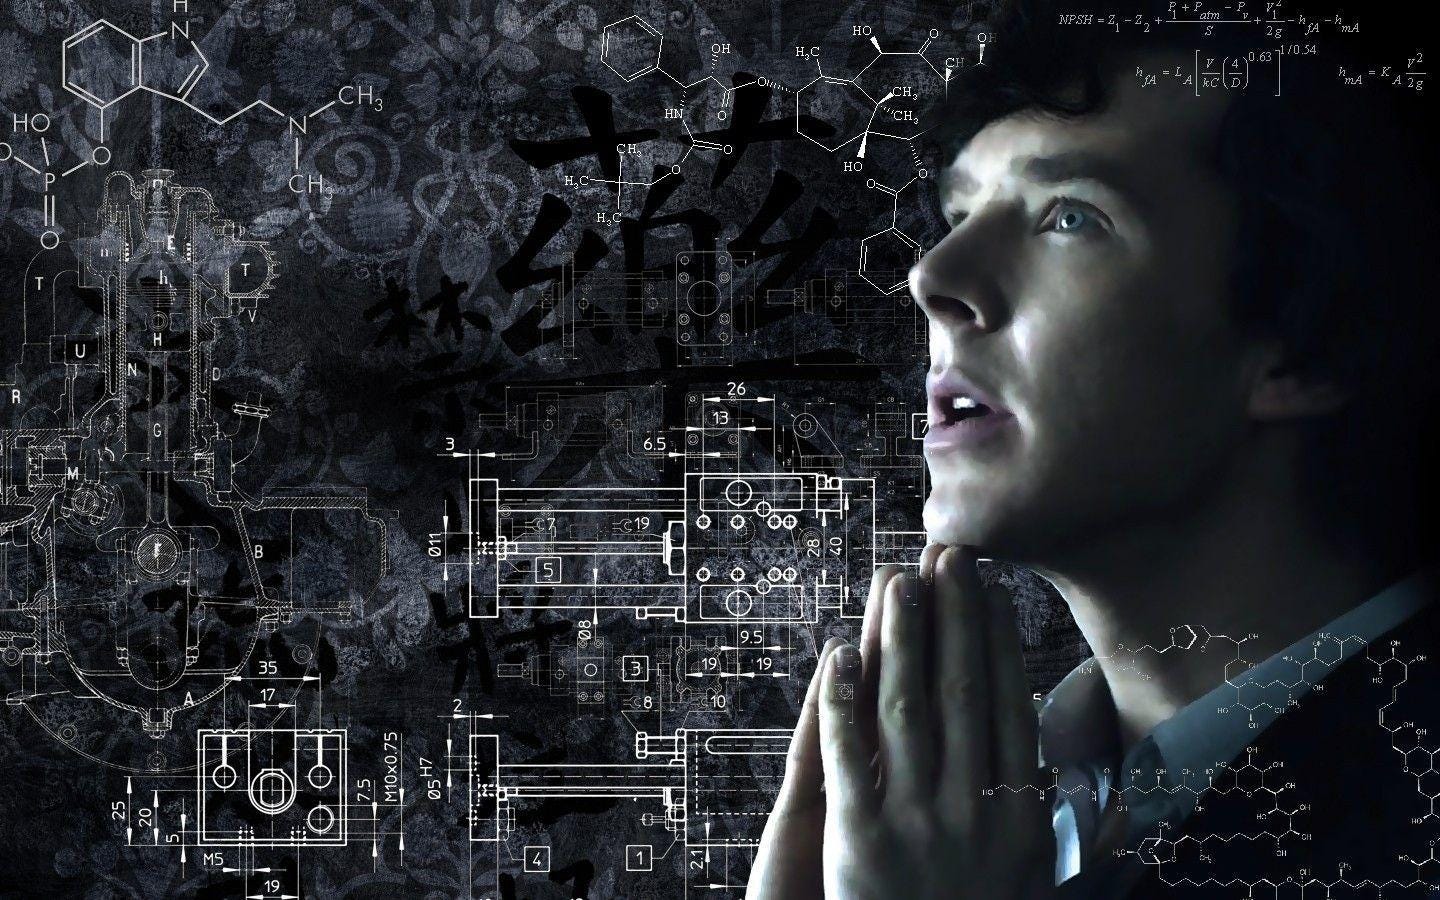 Benedict Cumberbatch-Starring 'Sherlock' Sells Wide for BBC Studios